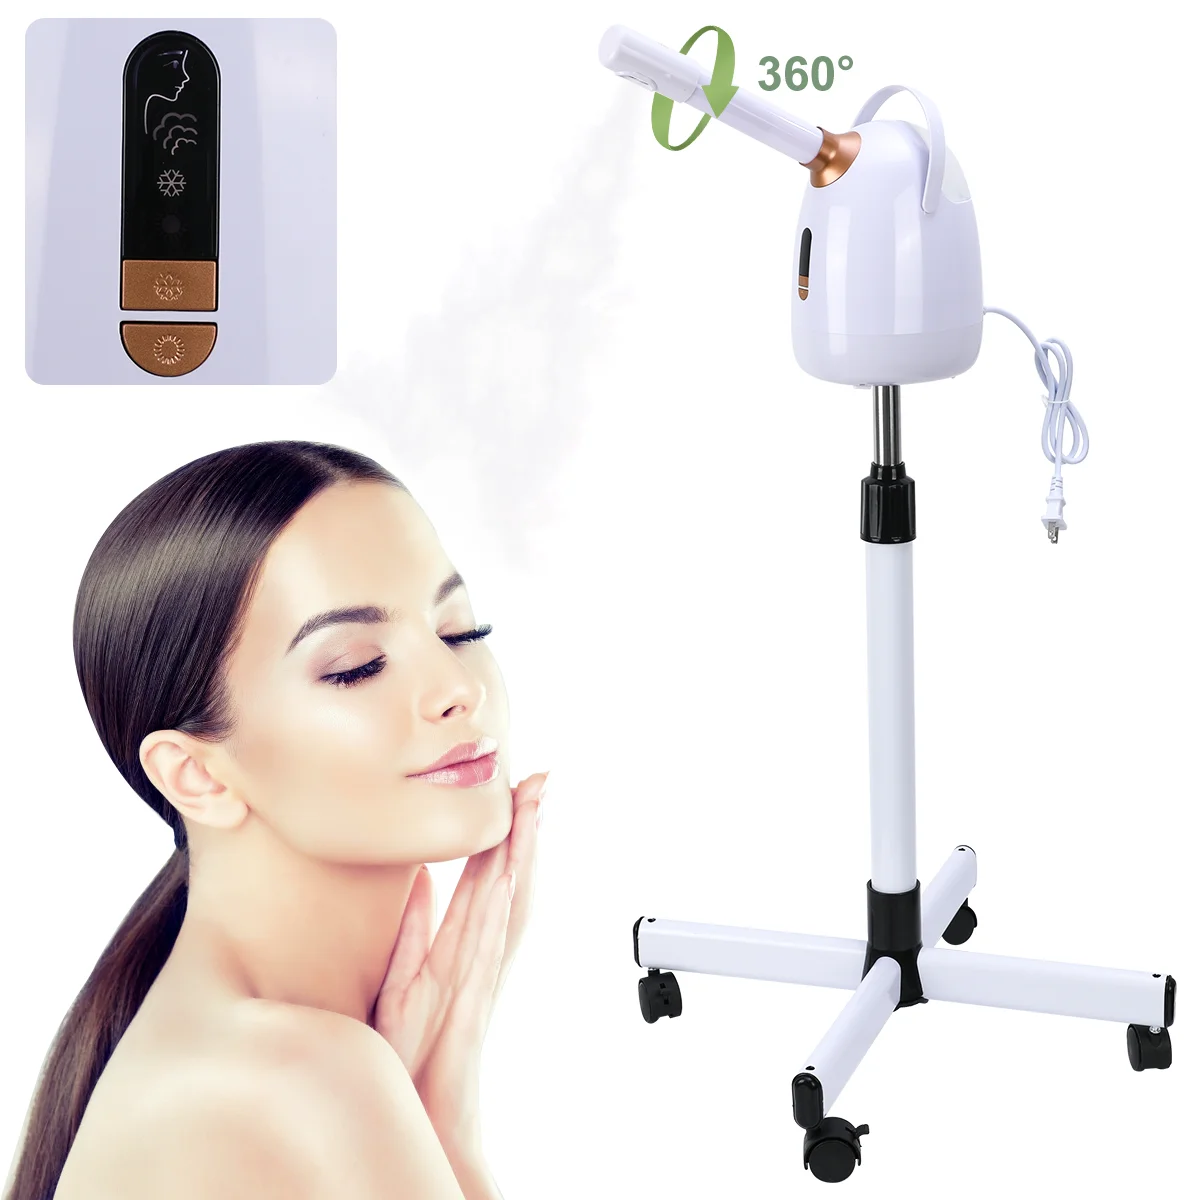 

Vaporizador Facial, Sauna Facial Profesional de Nano Iones, Rociador SPA Facial de Mano, para Hidratación Facial, Limpieza Profu